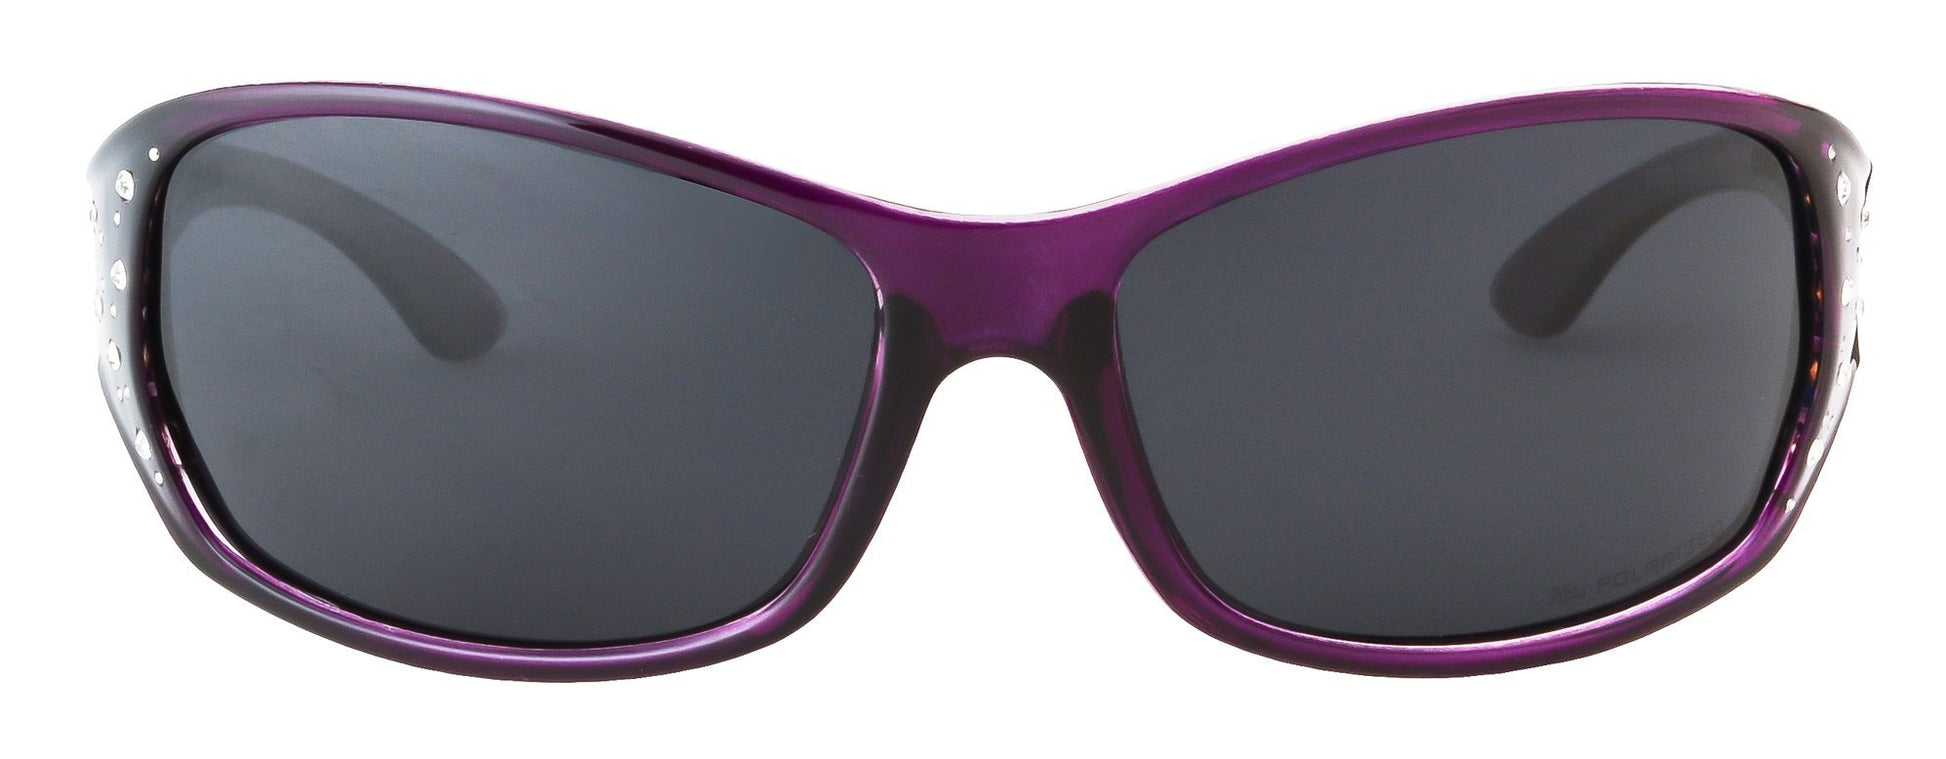 Second image: Polarized Sunglasses for Women – Deep Lavender Frame – Dark Smoke Lens – HZ Series Elettra – Women’s Premium Designer Fashion Sunglasses